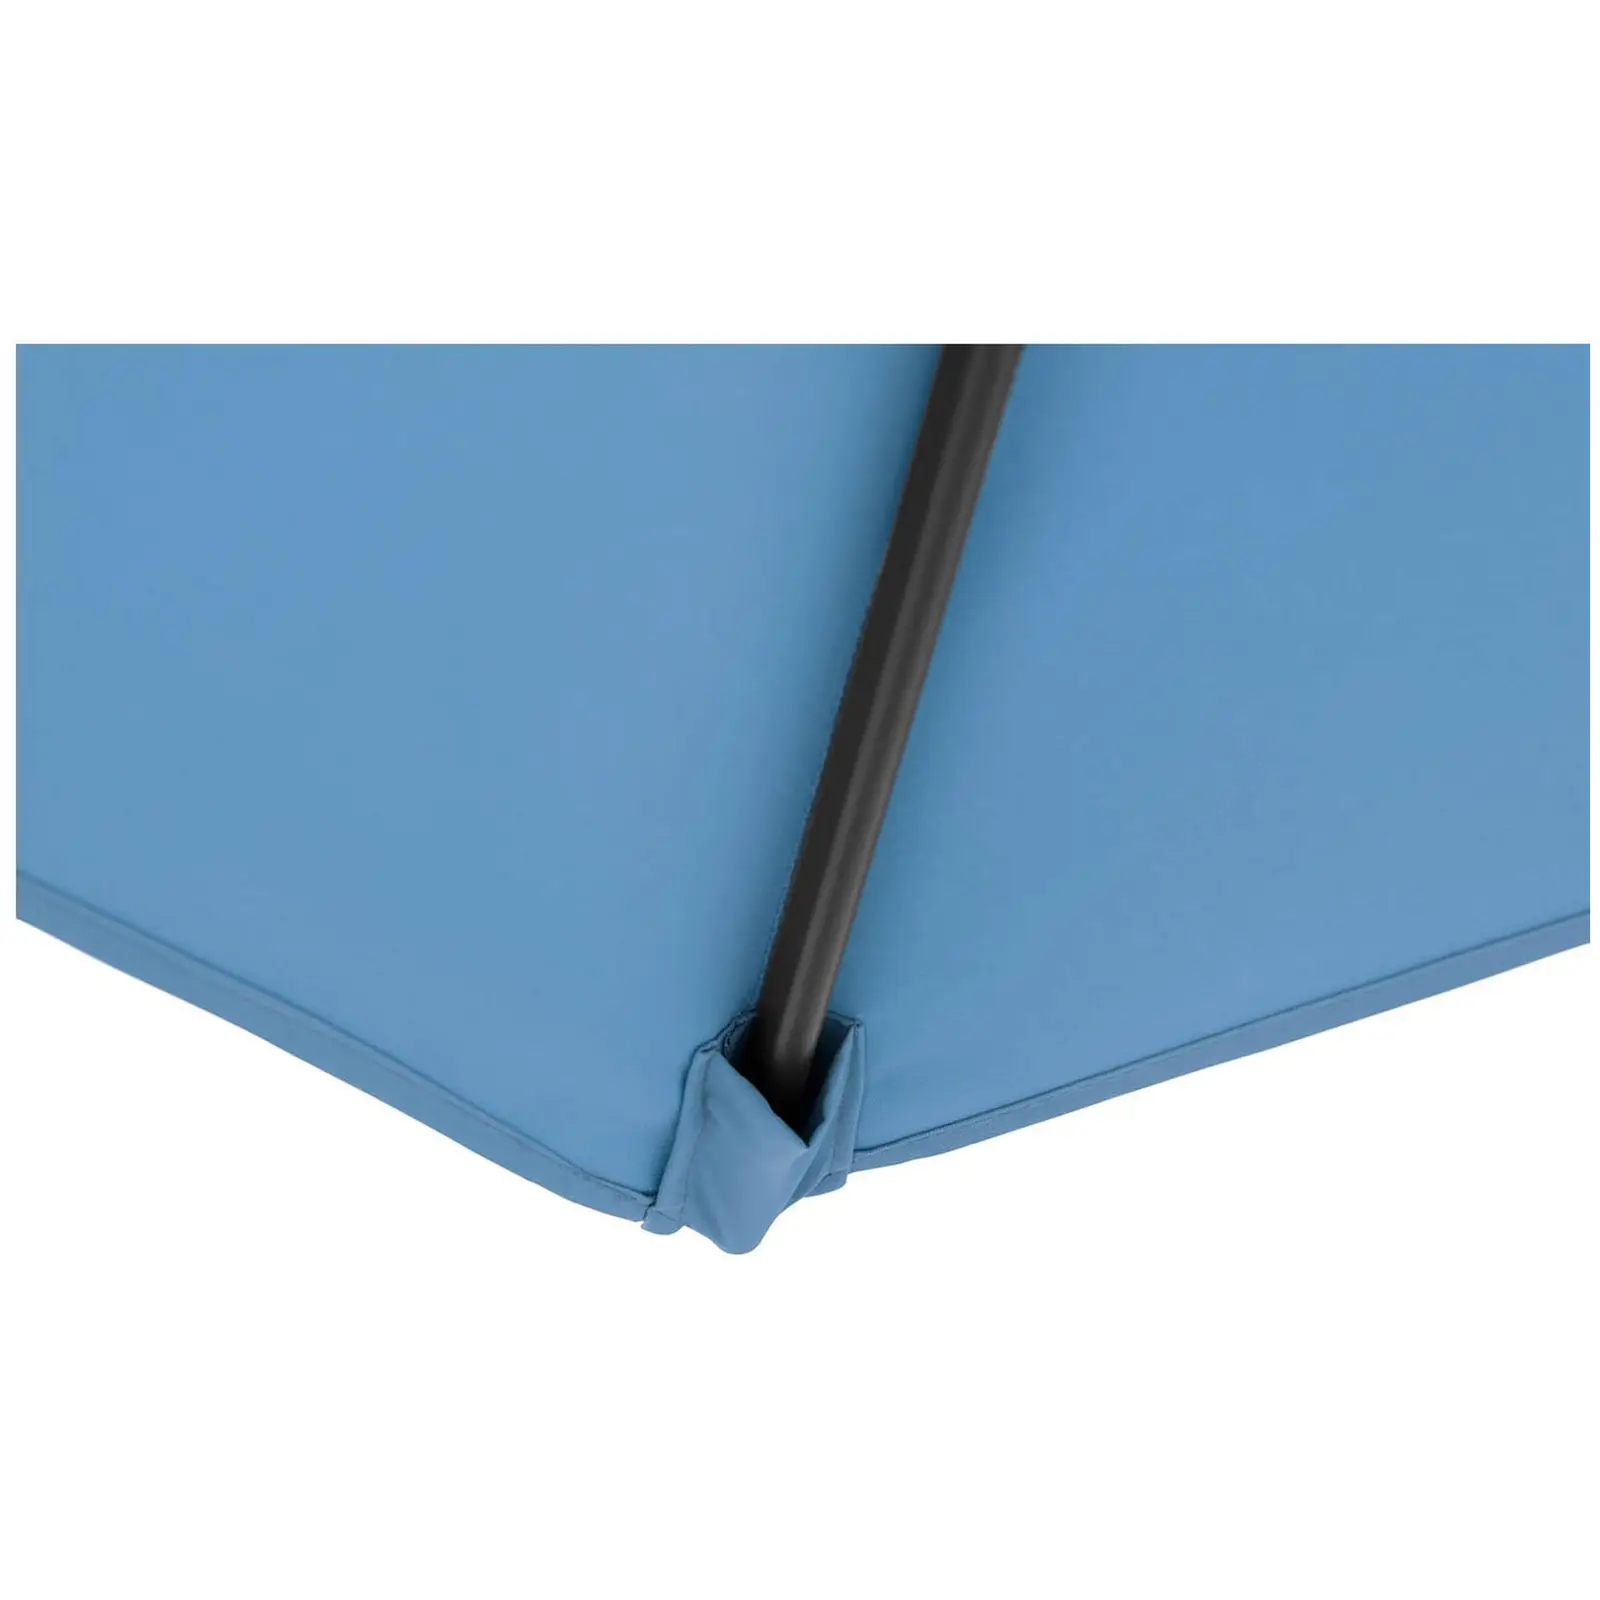 B-Ware Sonnenschirm groß - blau - rechteckig - 200 x 300 cm - neigbar